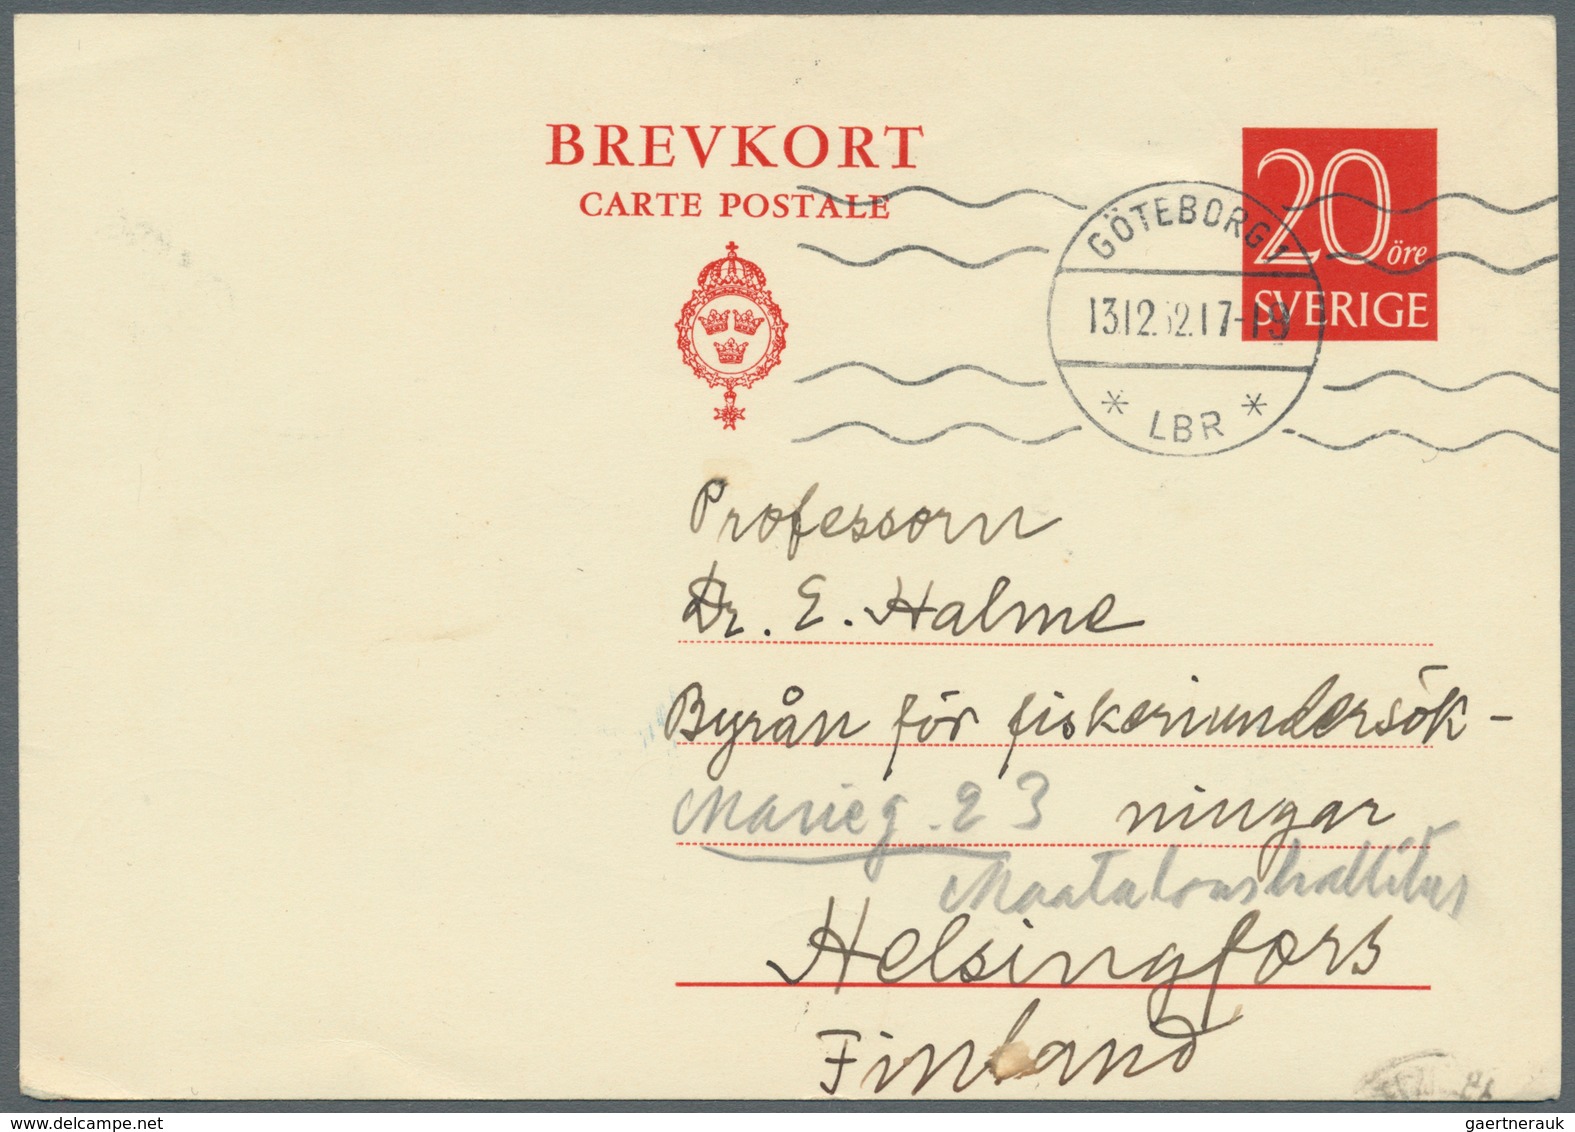 Schweden - Ganzsachen: 1880/1960 (ca): 220 used postal stationery - e.g. post cards (a few with addi